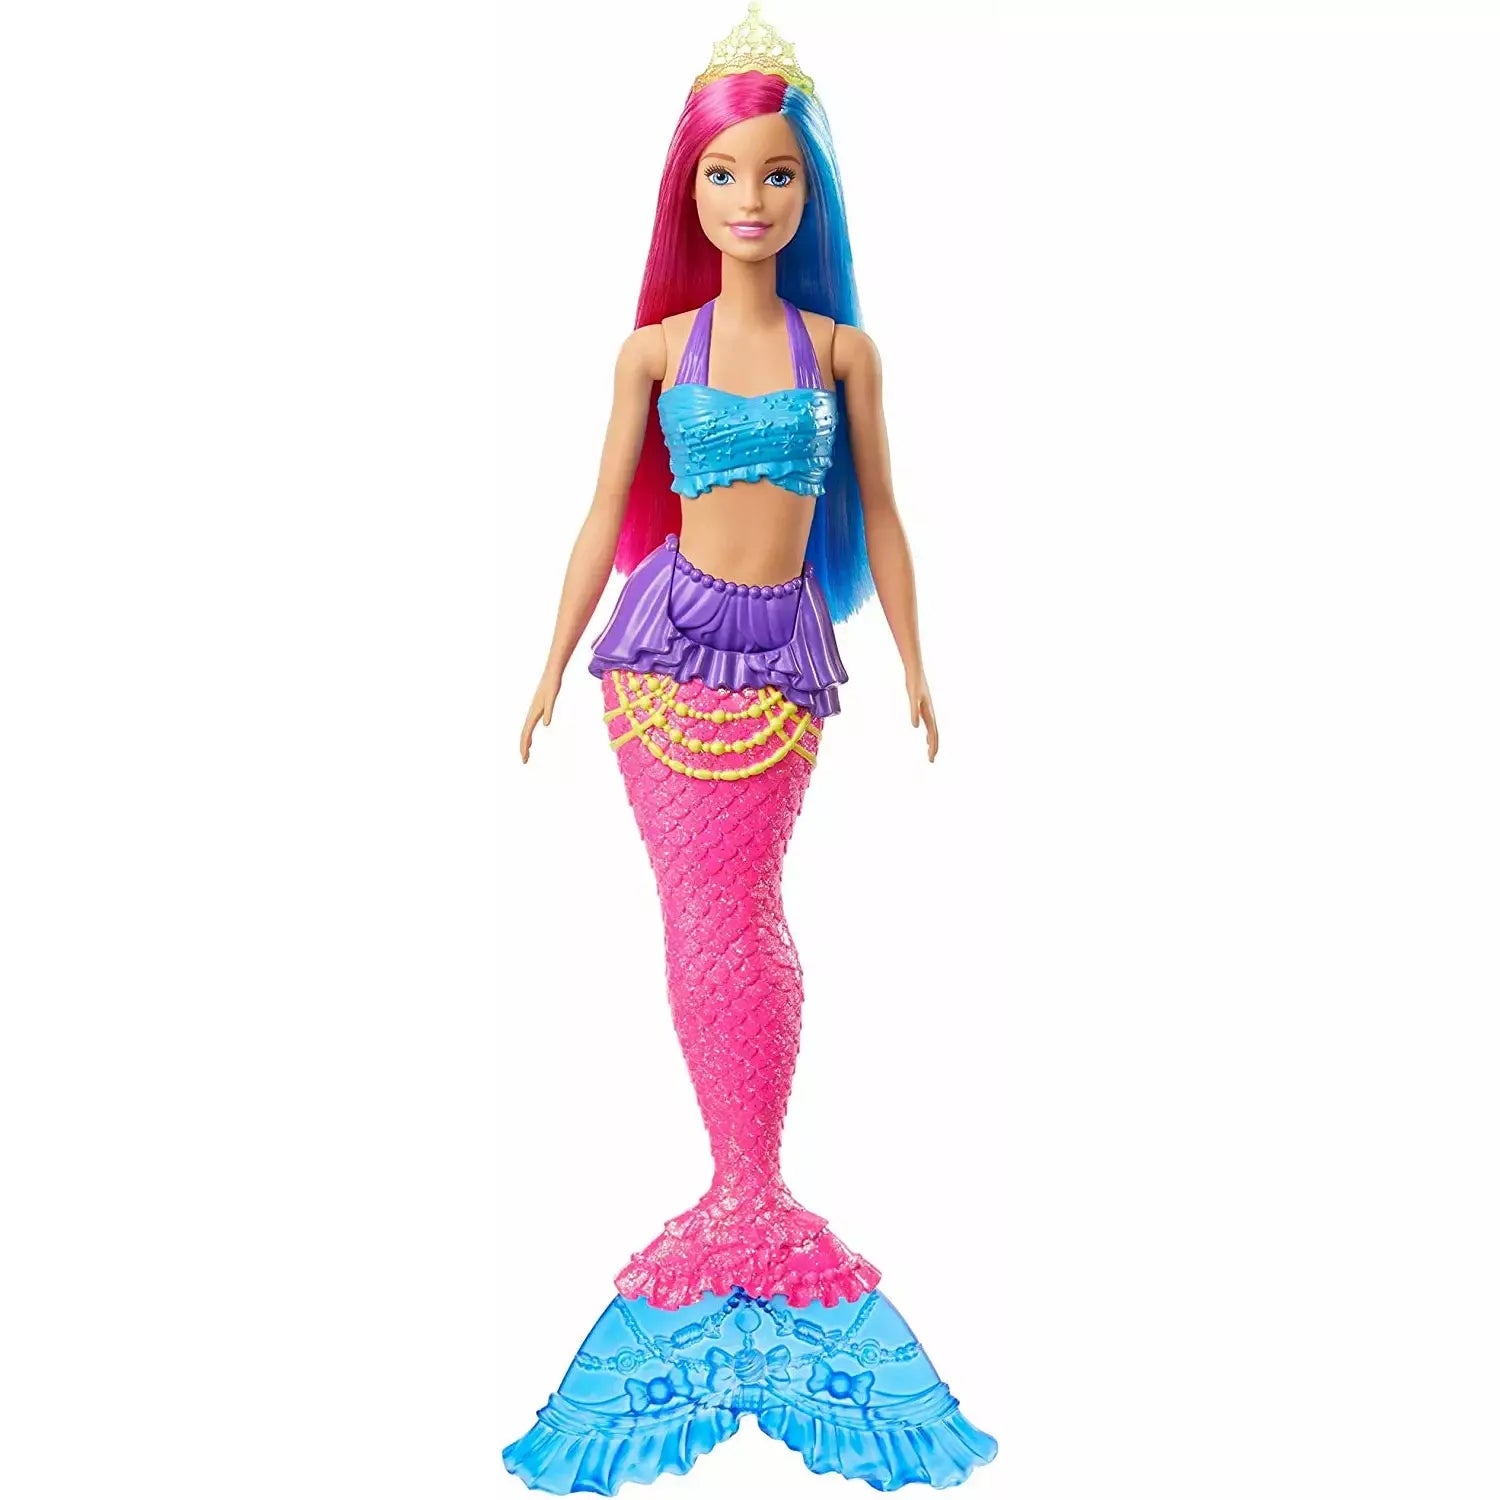 Barbie Dreamtopia Mermaid Doll, 12-inch, Pink and Blue Hair - BumbleToys - 5-7 Years, Barbie, Fashion Dolls & Accessories, Girls, Mermaid, Pre-Order